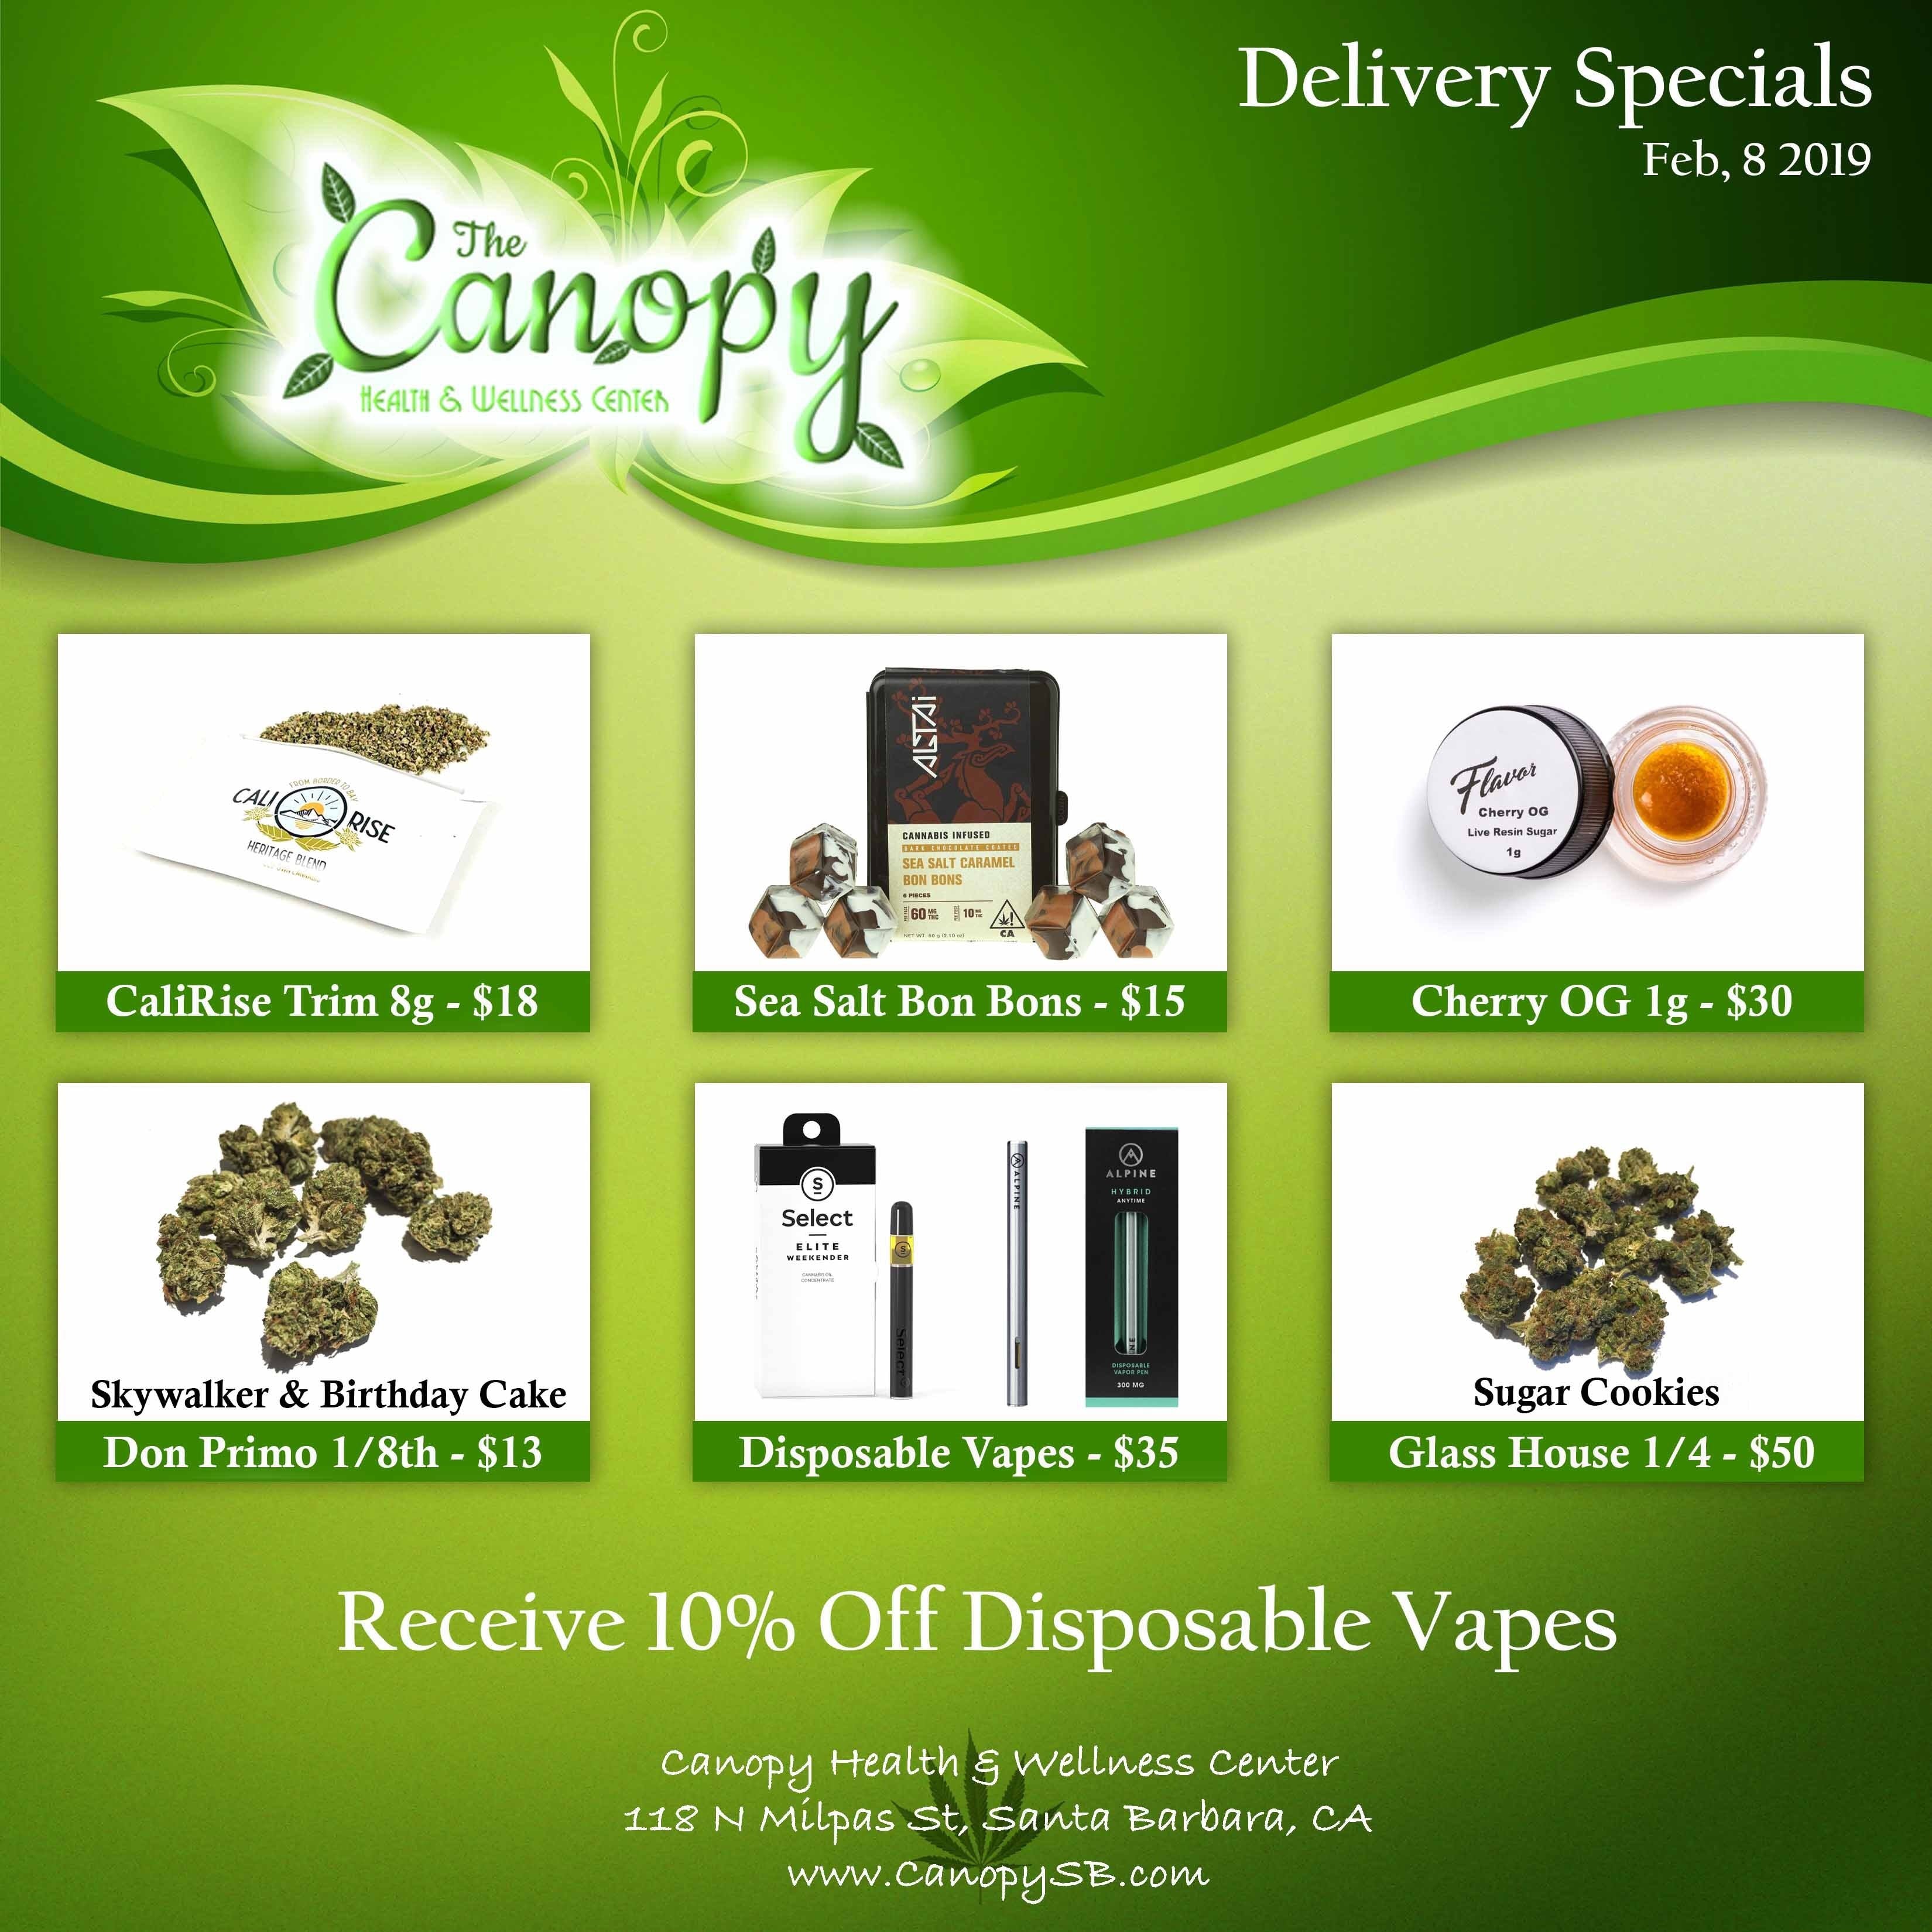 marijuana-dispensaries-118-n-milpas-st-santa-barbara-all-delivery-specials-21-21-21-21